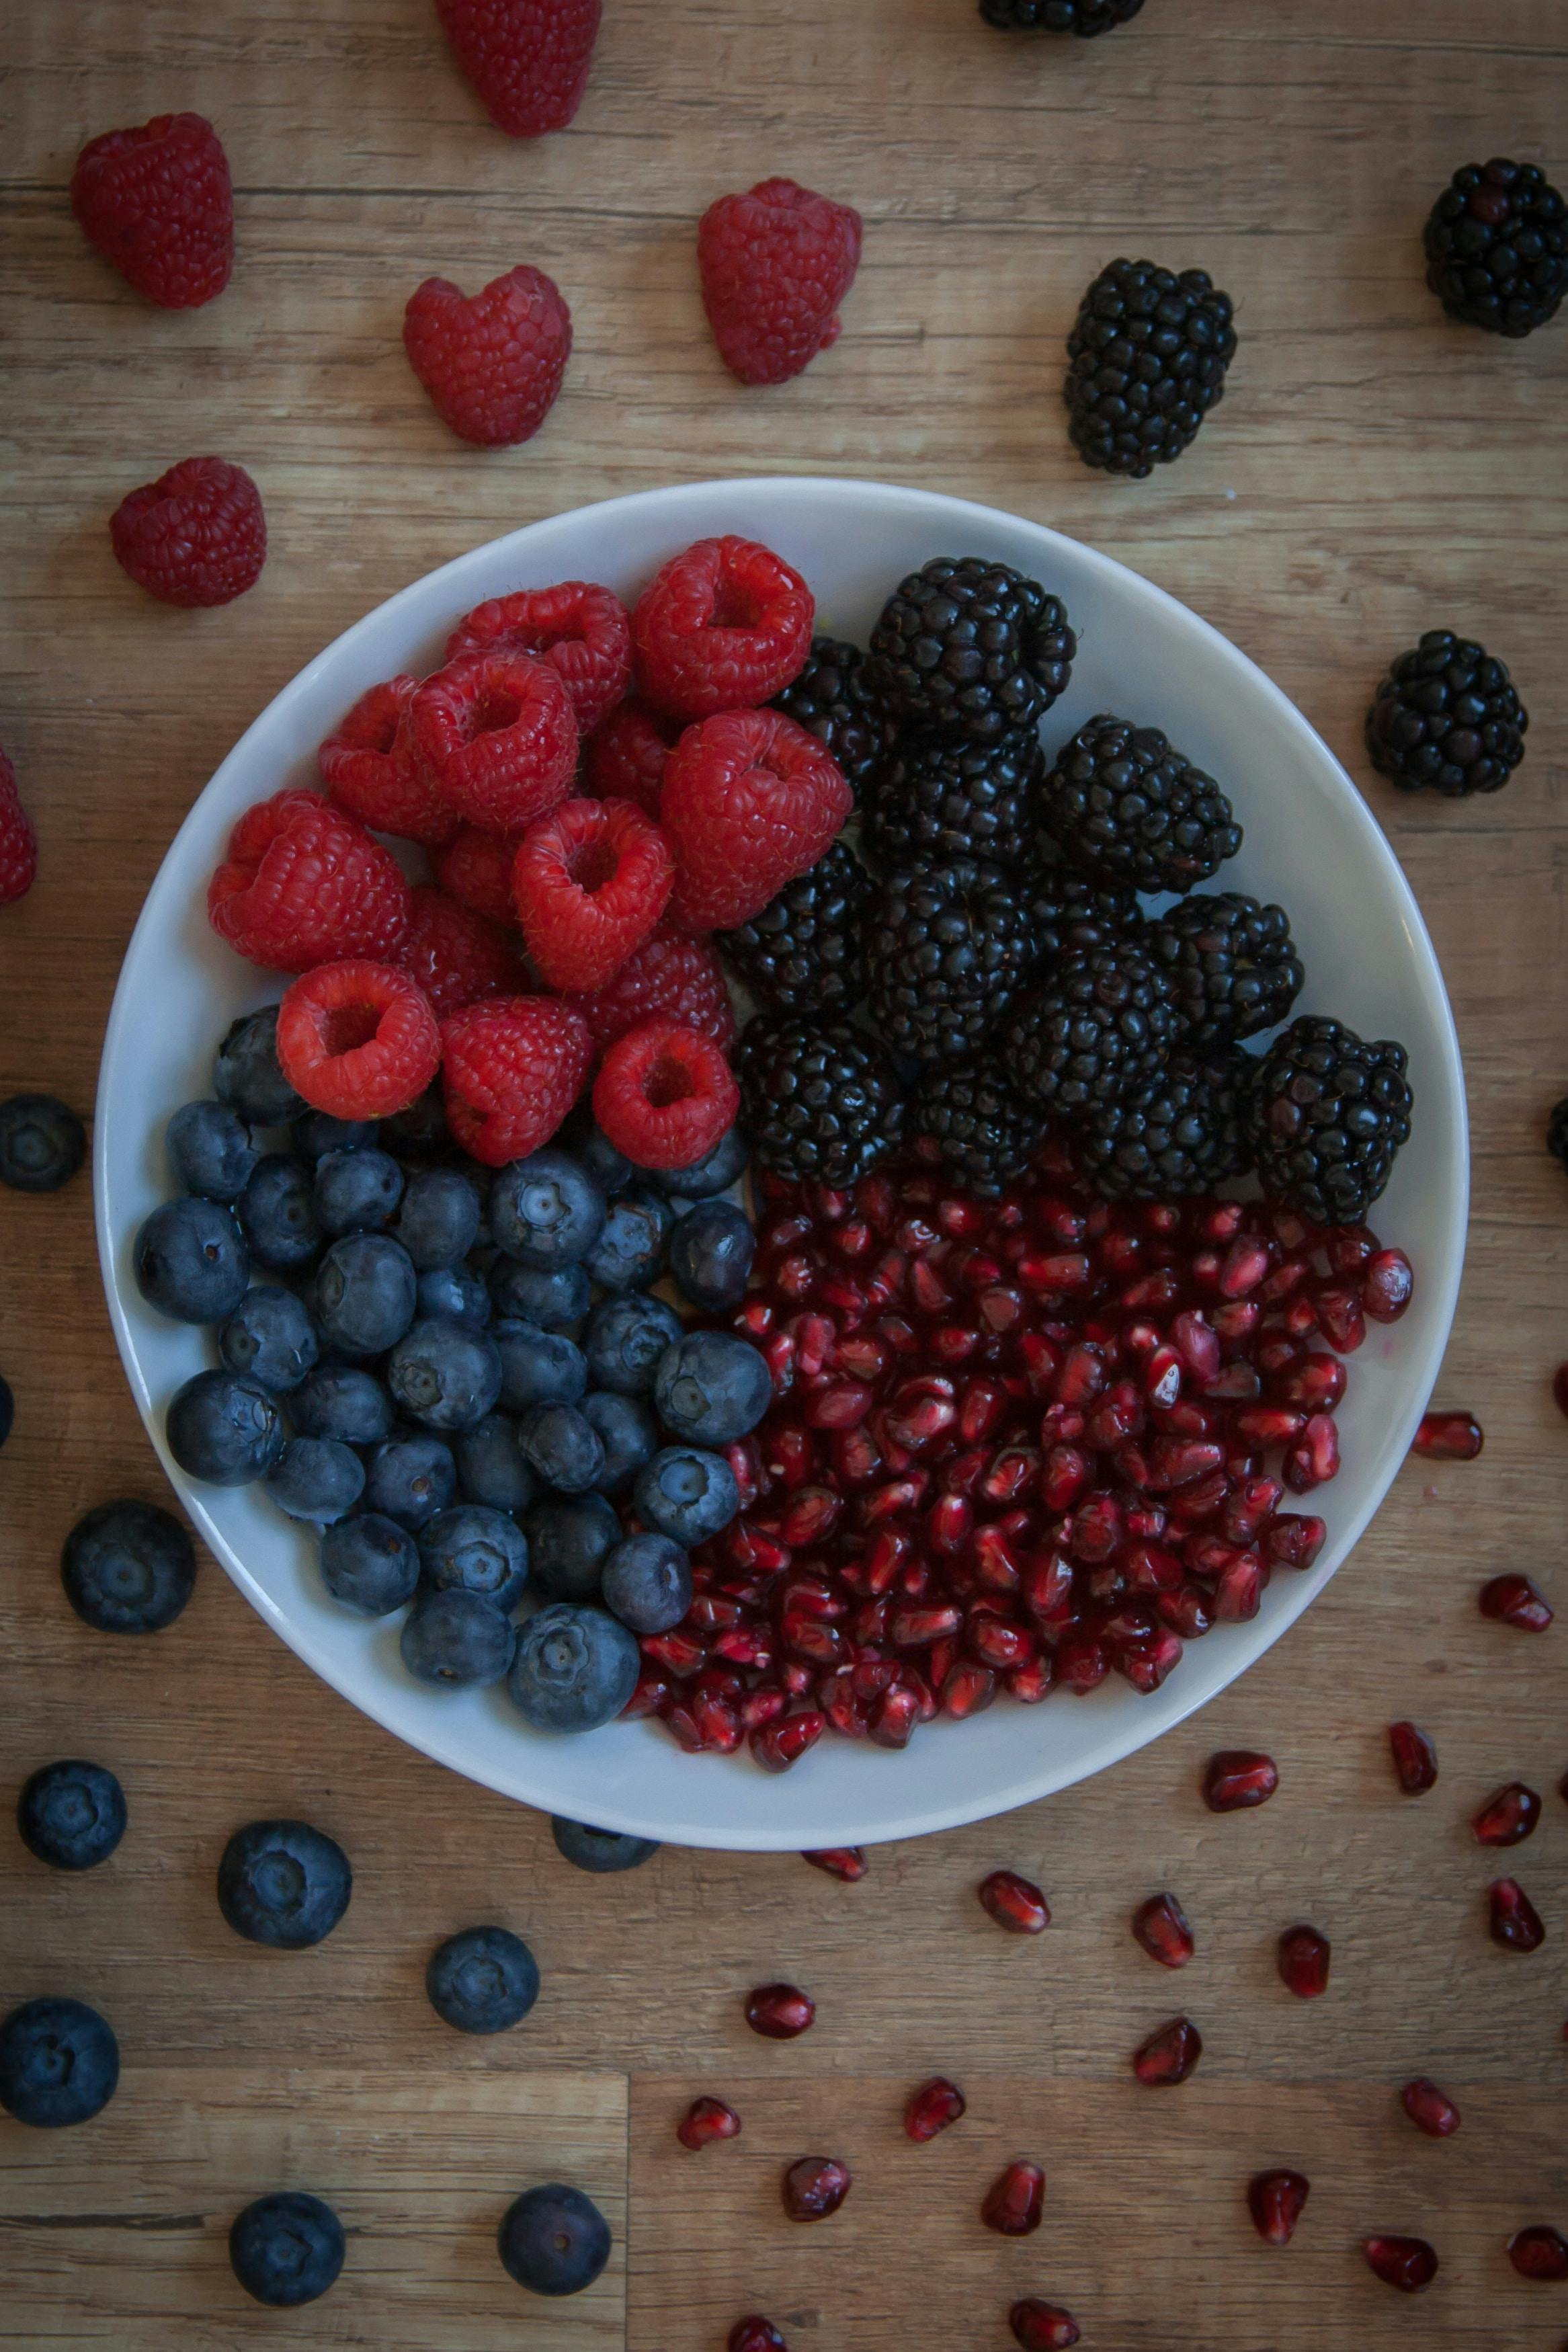 Berries in a Bowl by Adel Grober on Unsplash